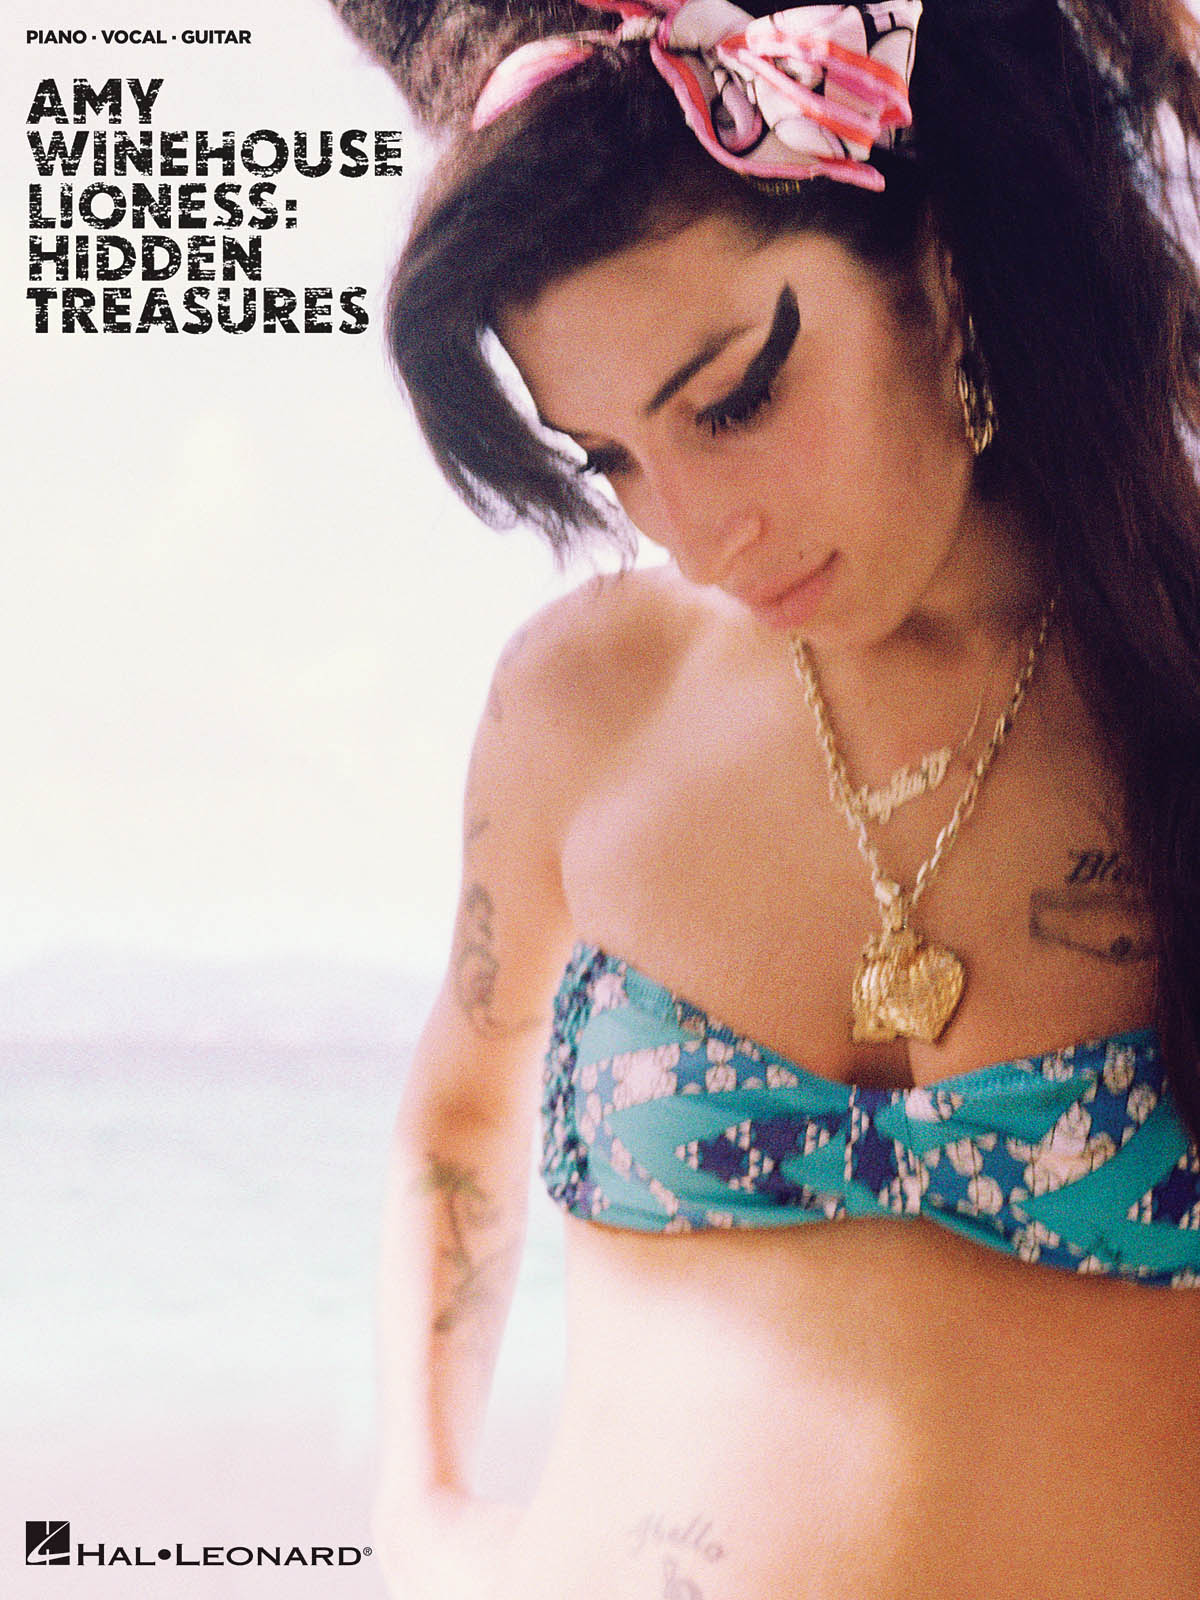 Amy Winehouse: Lioness Hidden Treasures